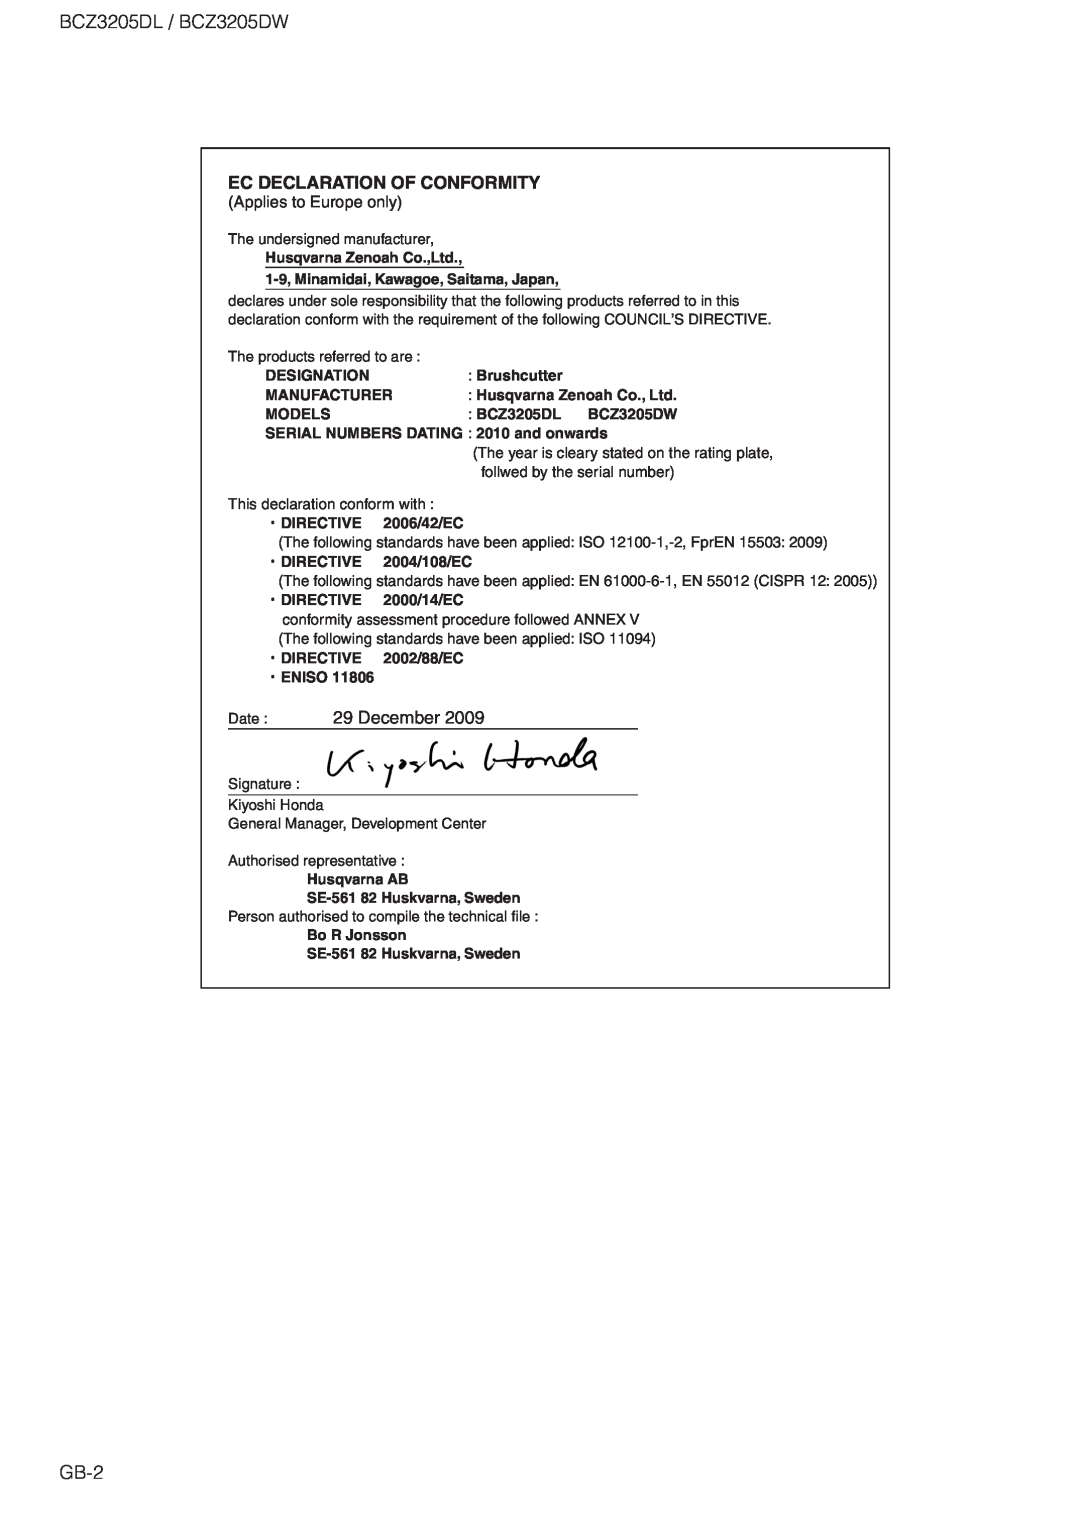 Husqvarna BCZ3205DL, BCZ3205DW owner manual Ec Declaration Of Conformity, Date 29 December 